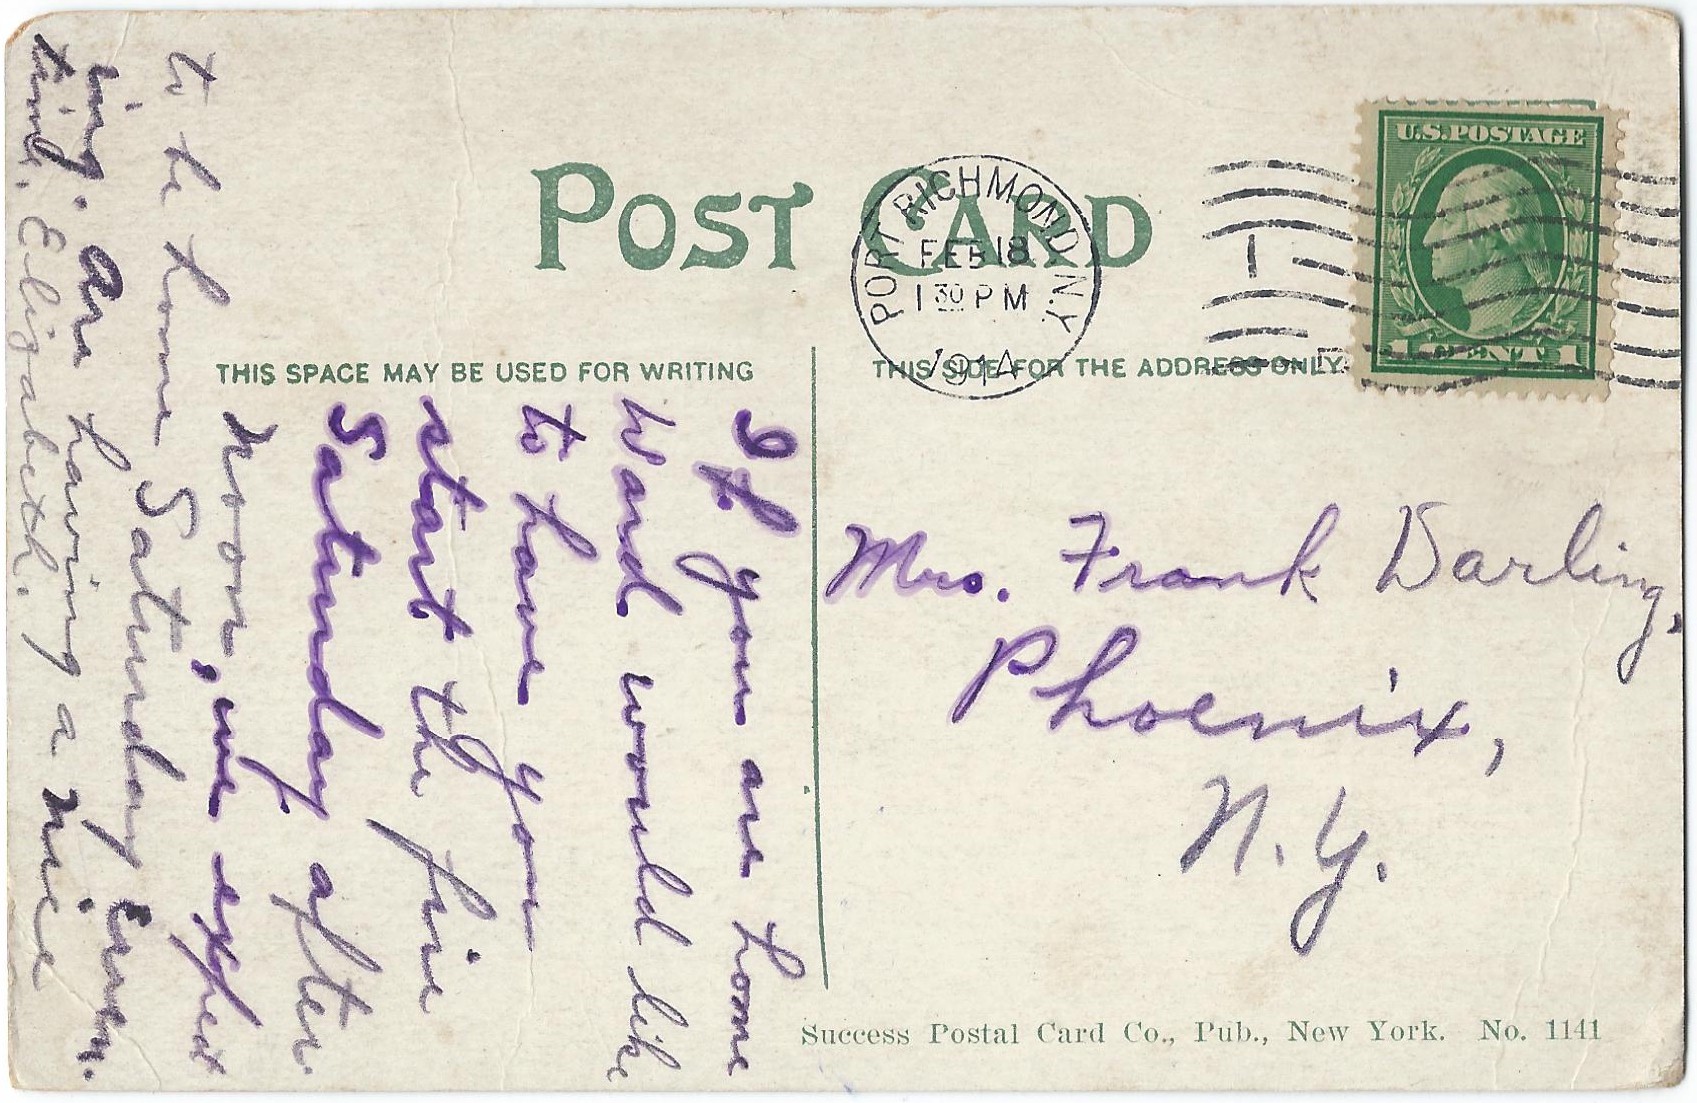 The Aquarium, New York Postcard No 1141 Postmarked 1914